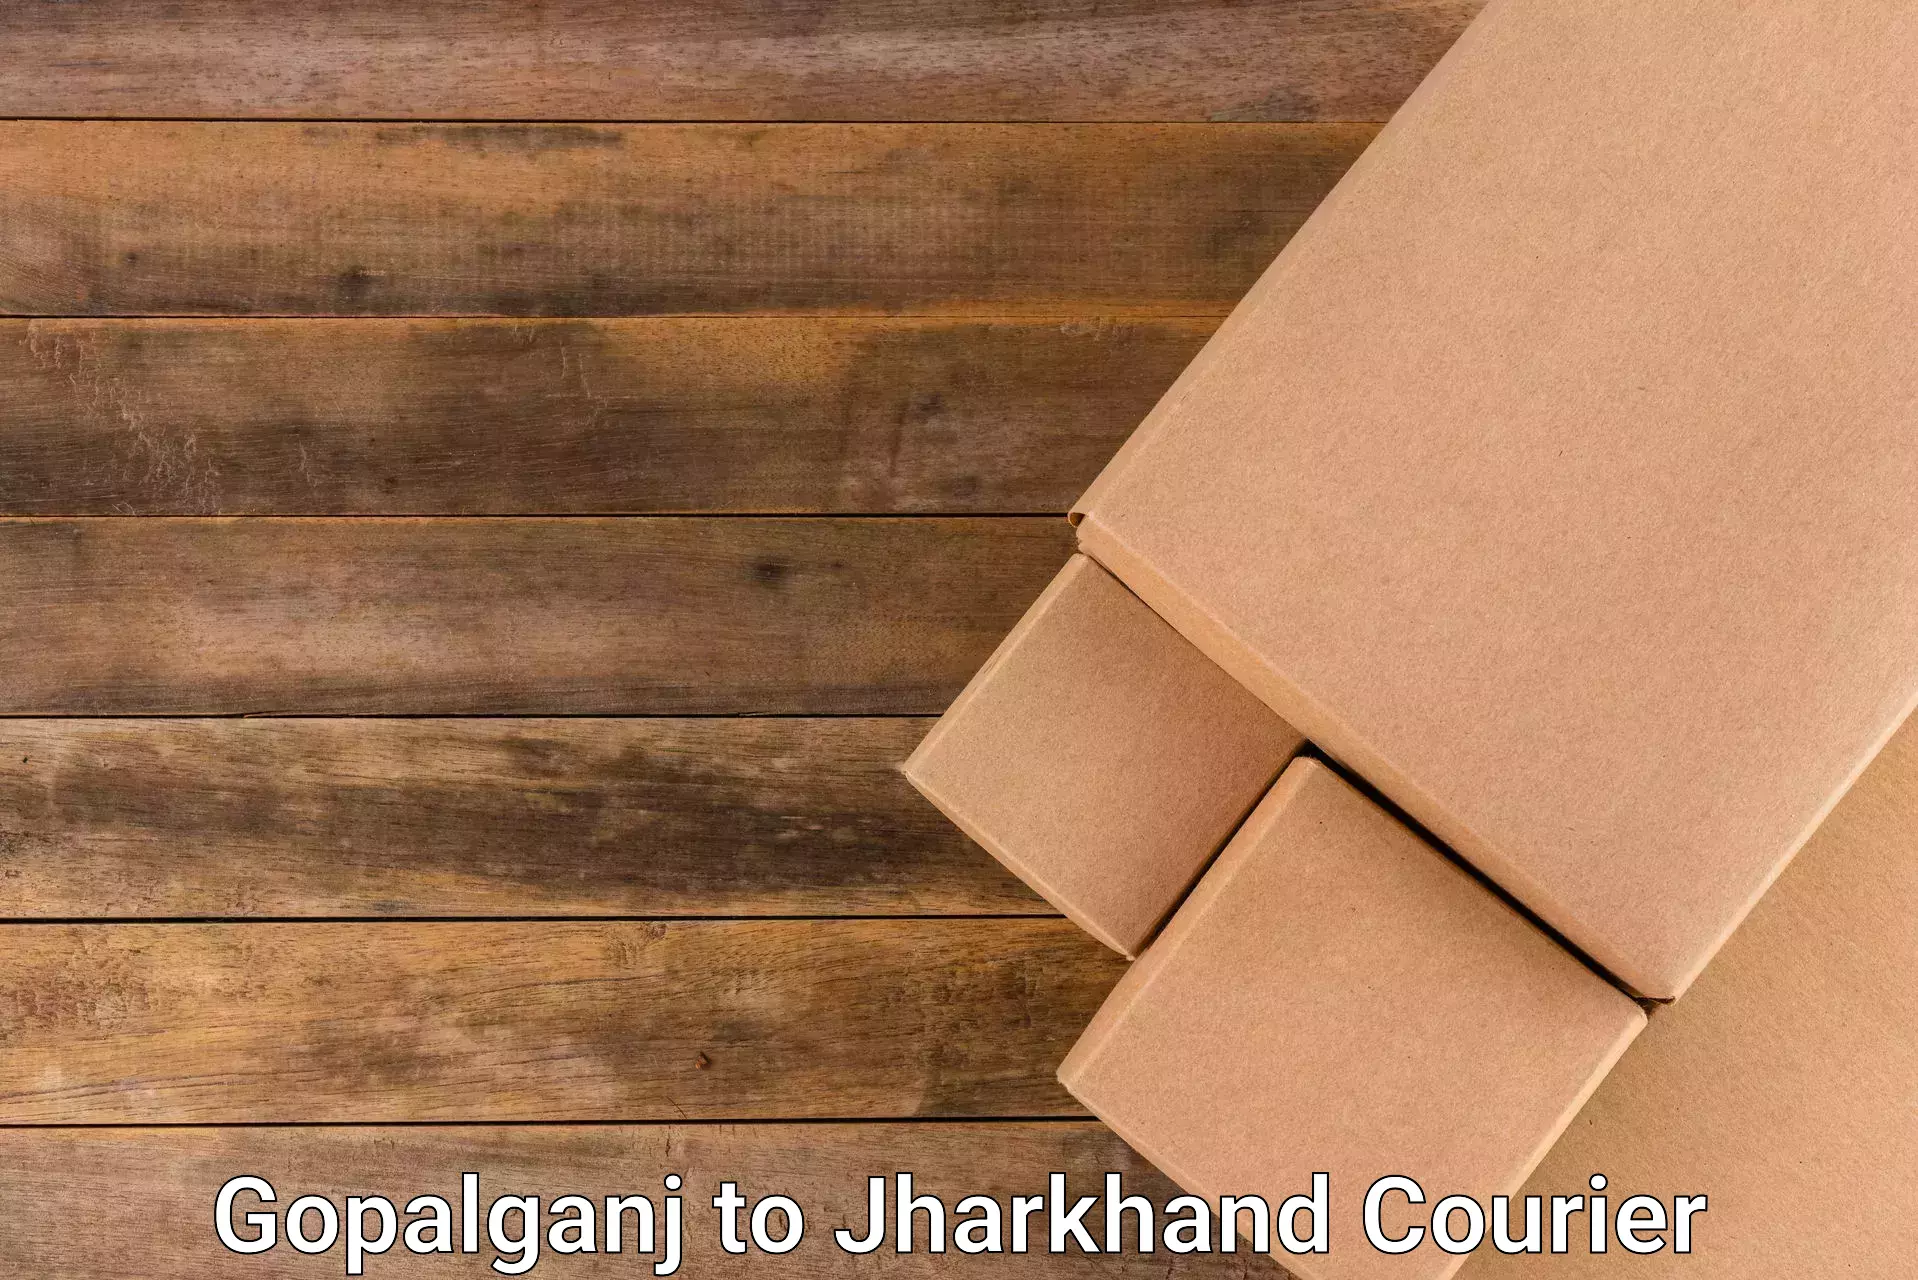 Courier service comparison Gopalganj to Isri